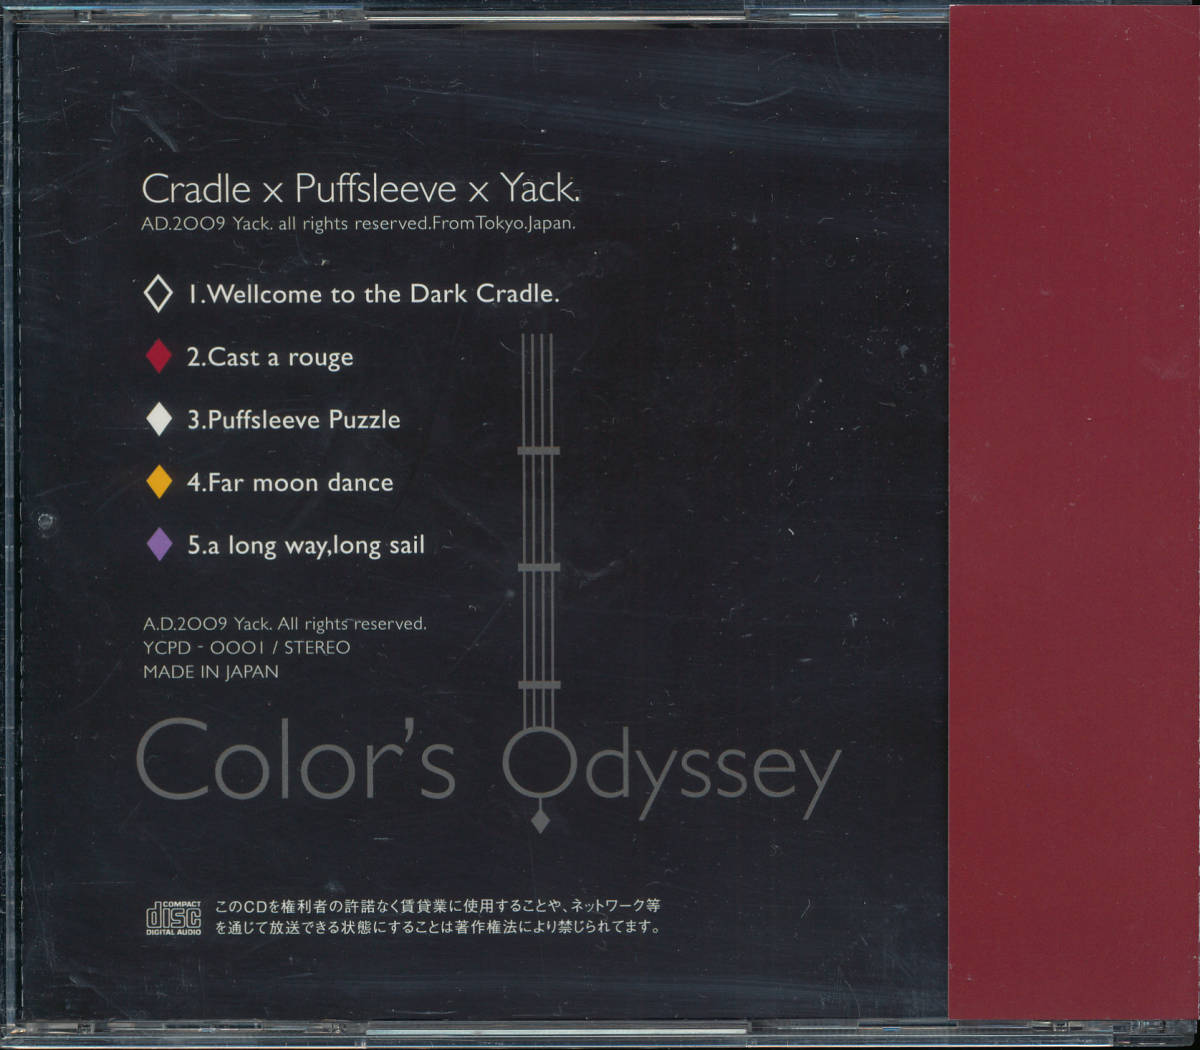 CradlePuffsleeveYack./Color`s Odyssey /Cradle Puffsleeve Yack.